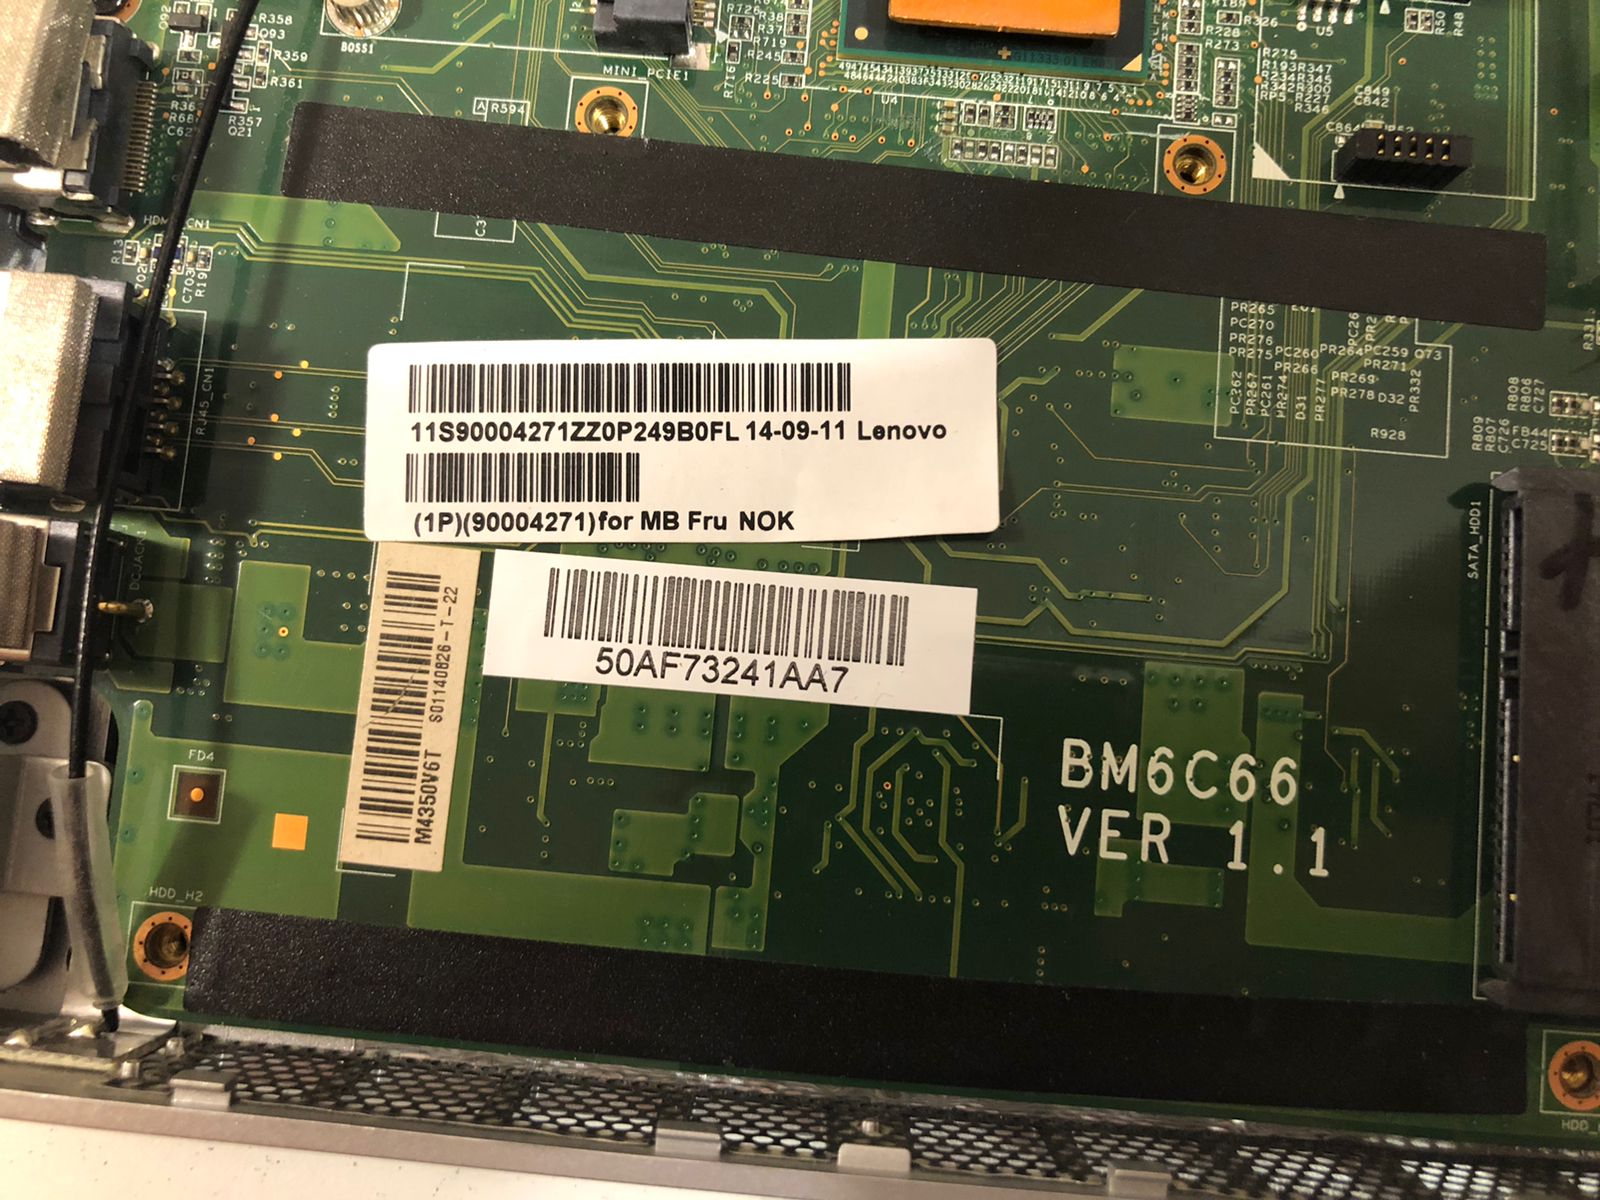  Lenovo Q190, 10115,  BIOS BM6C66 Ver 1.1 W25Q64FV